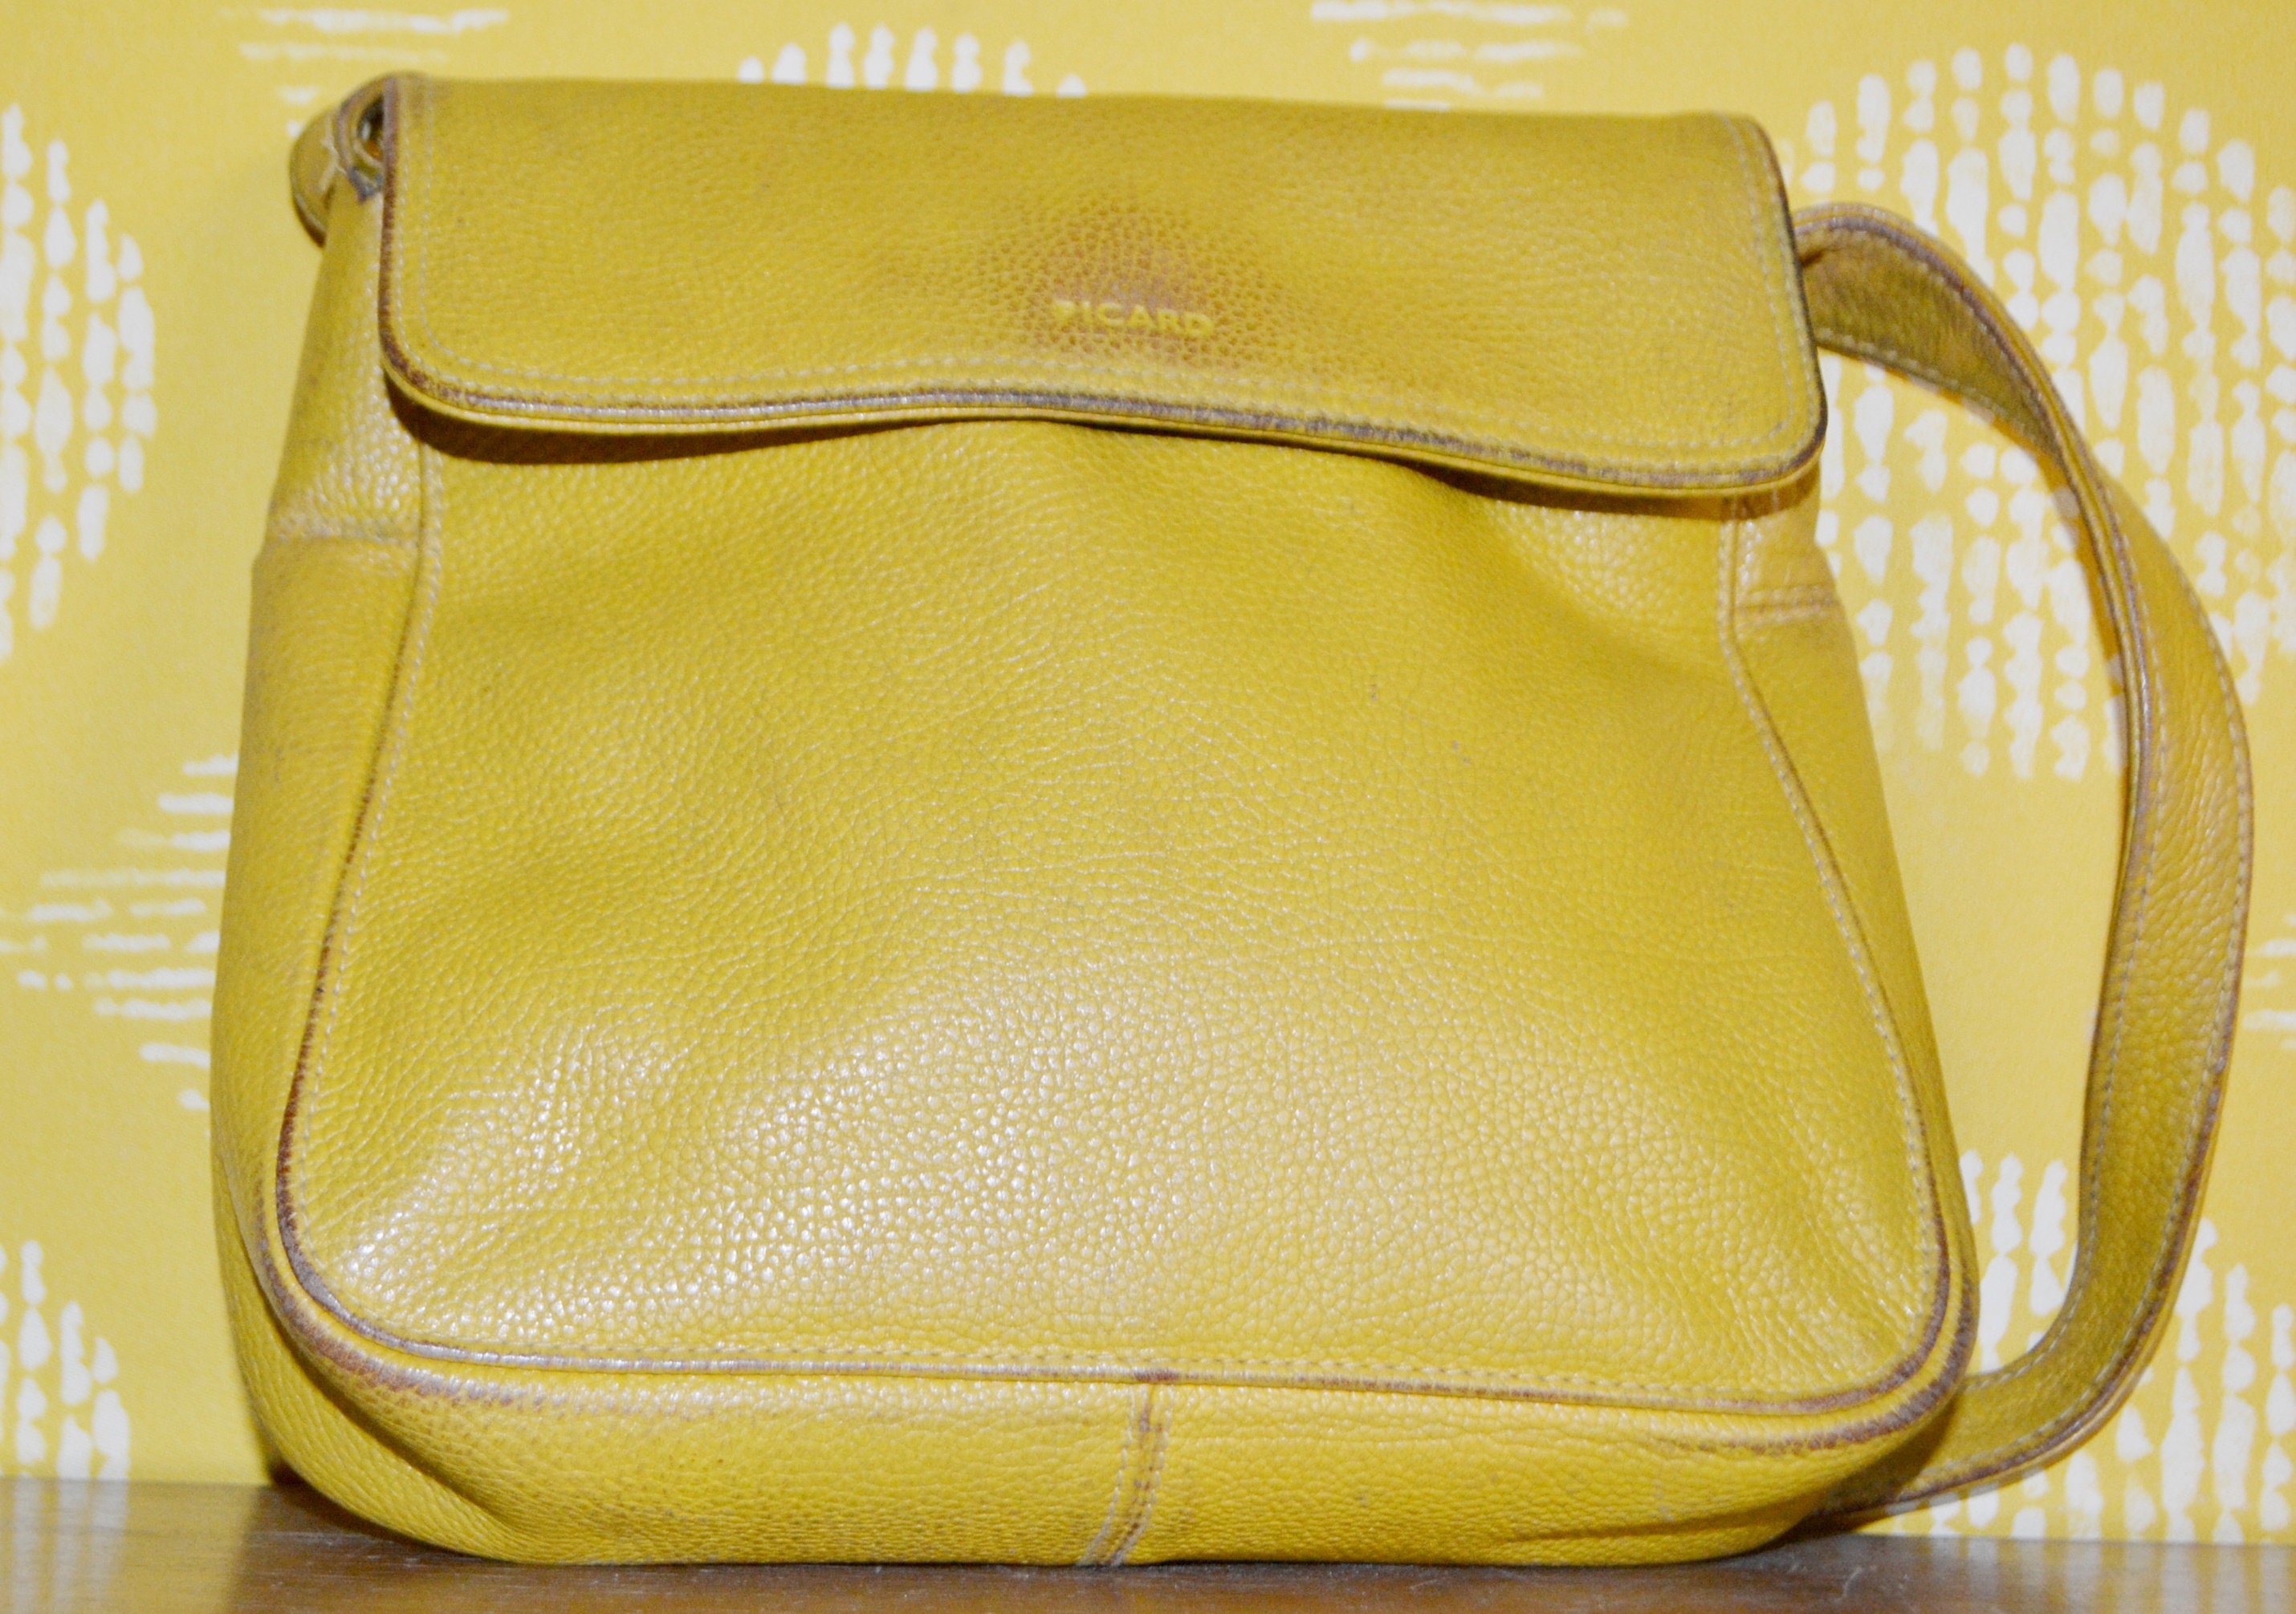 True Vintage Handbag Yellow by Picard 70s Vintage Bag Retro Mid Century Second Hand Wear Vintage Clothing